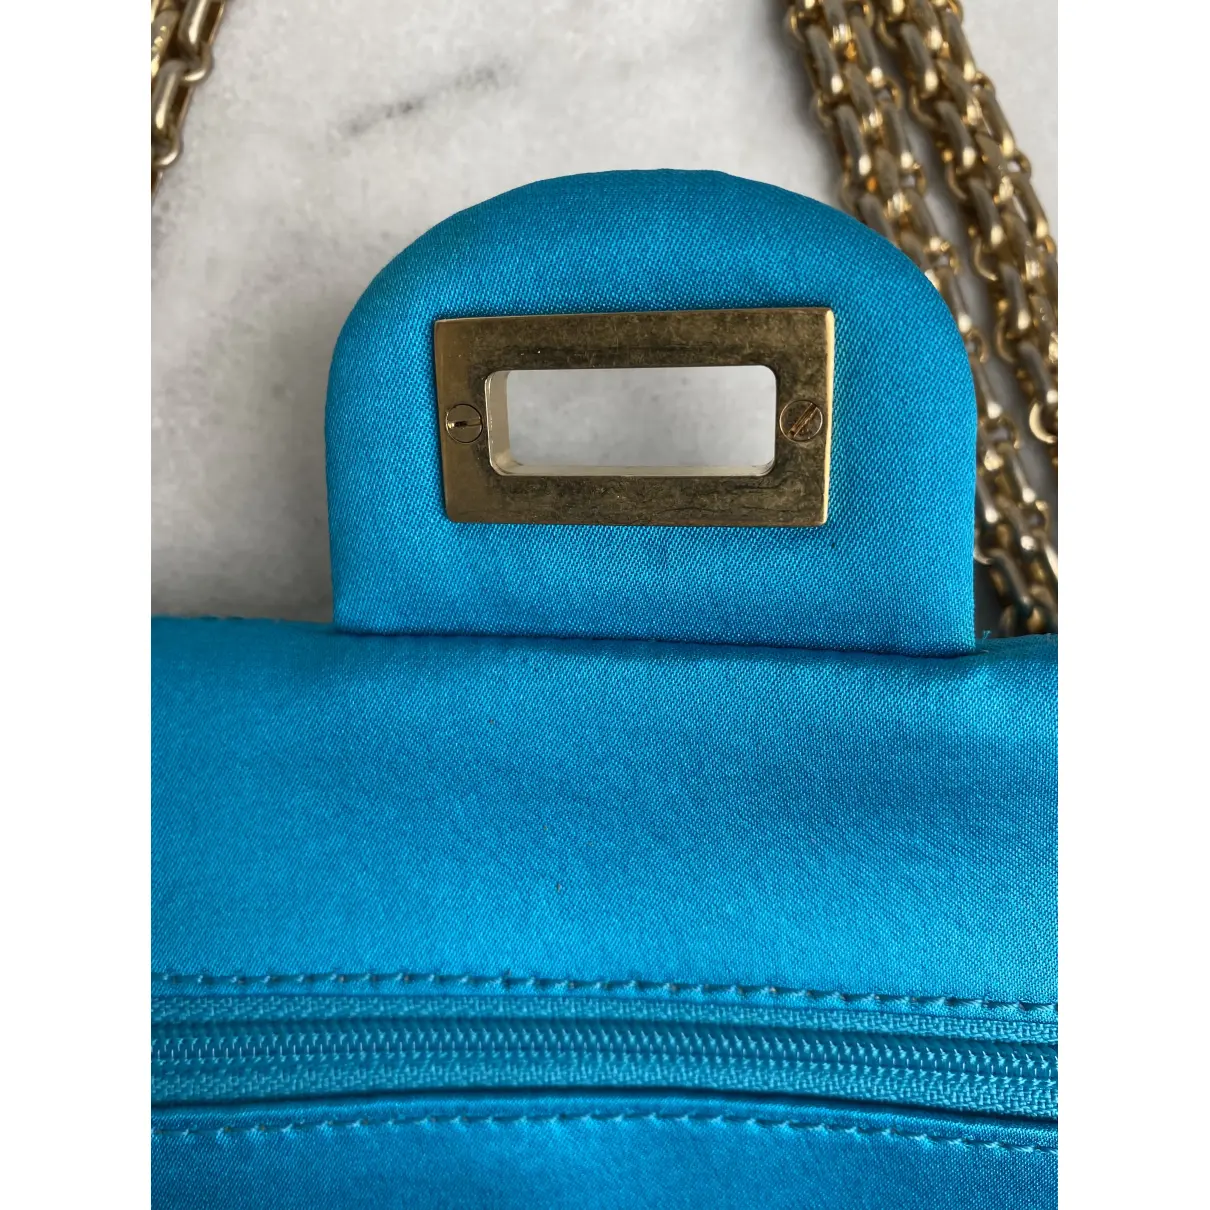 Buy Chanel Timeless/Classique cloth bag online - Vintage